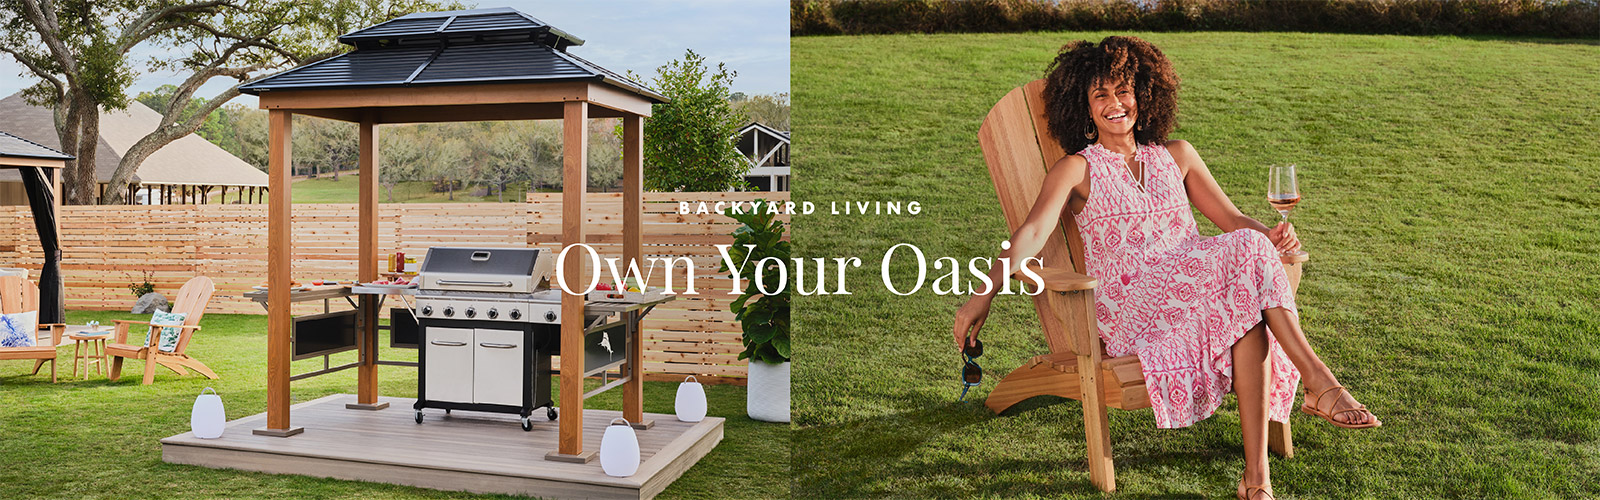 Backyard Living - Own Your Oasis